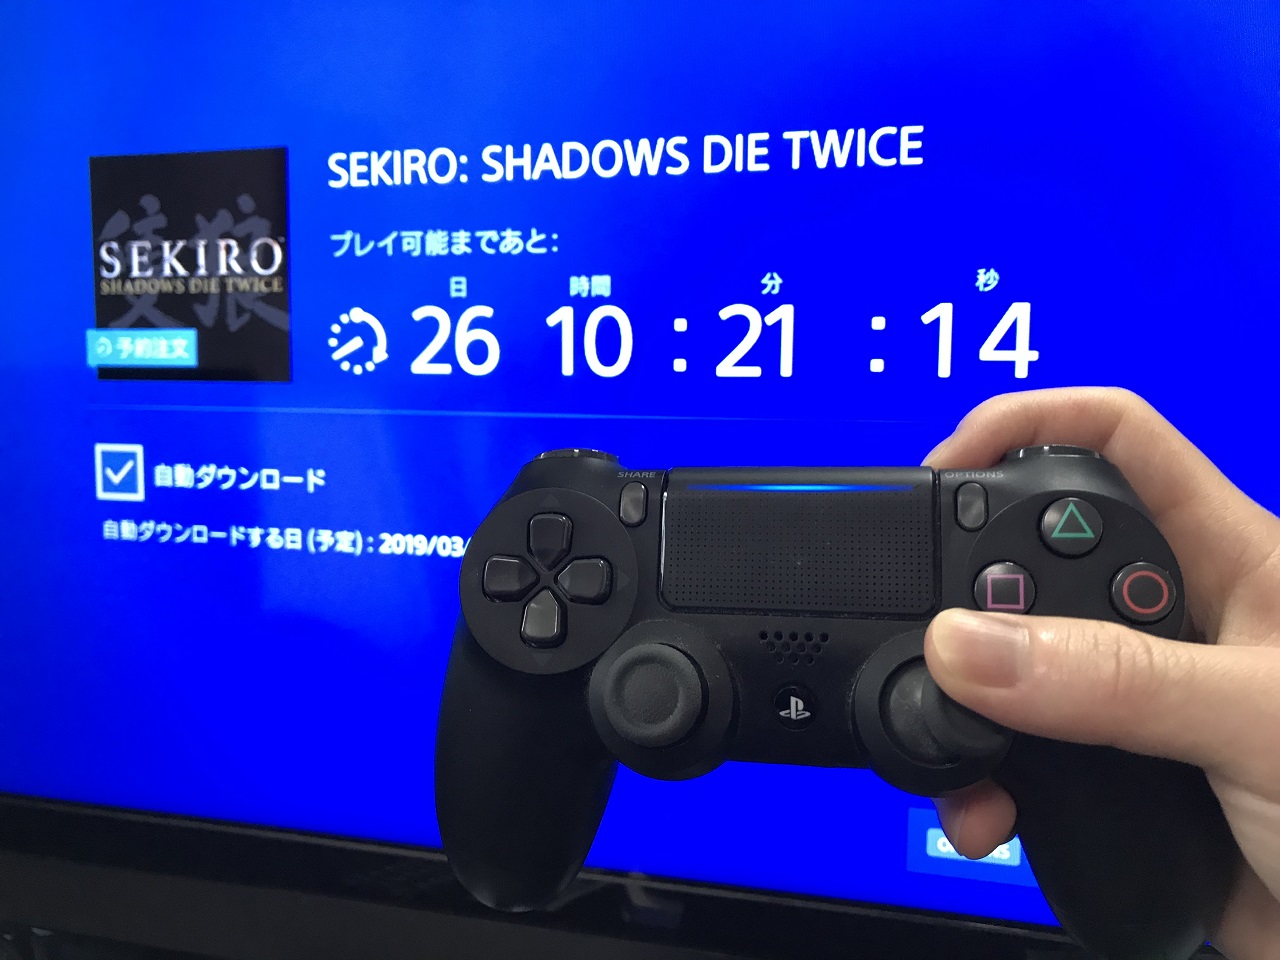 Sekiro Shadows Die Twice ボタン配置的に モンハン持ち になるのでは Sekiroを考える 体はゲームで出来ている